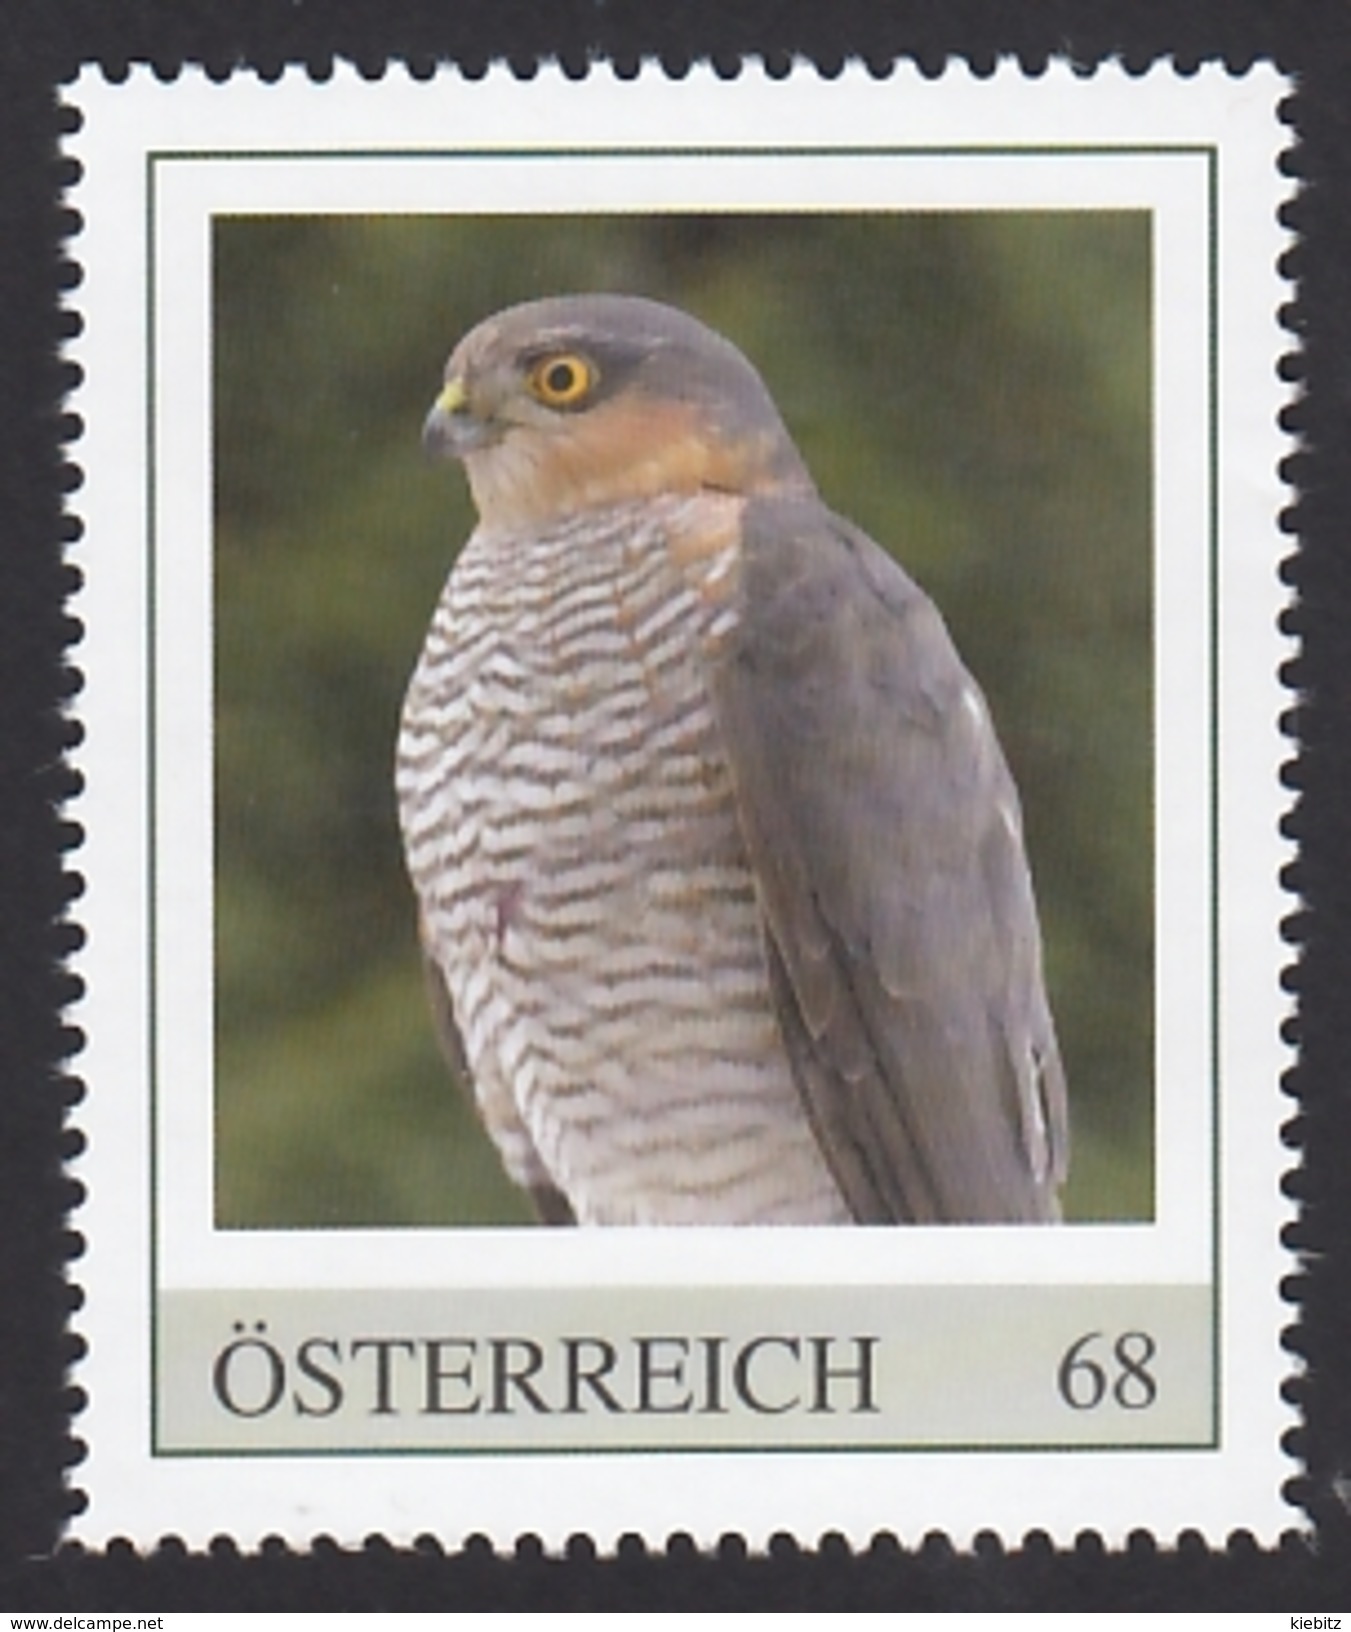 ÖSTERREICH 2015 ** Sperber / Accipiter Nisus - PM Personalized Stamp MNH - Adler & Greifvögel